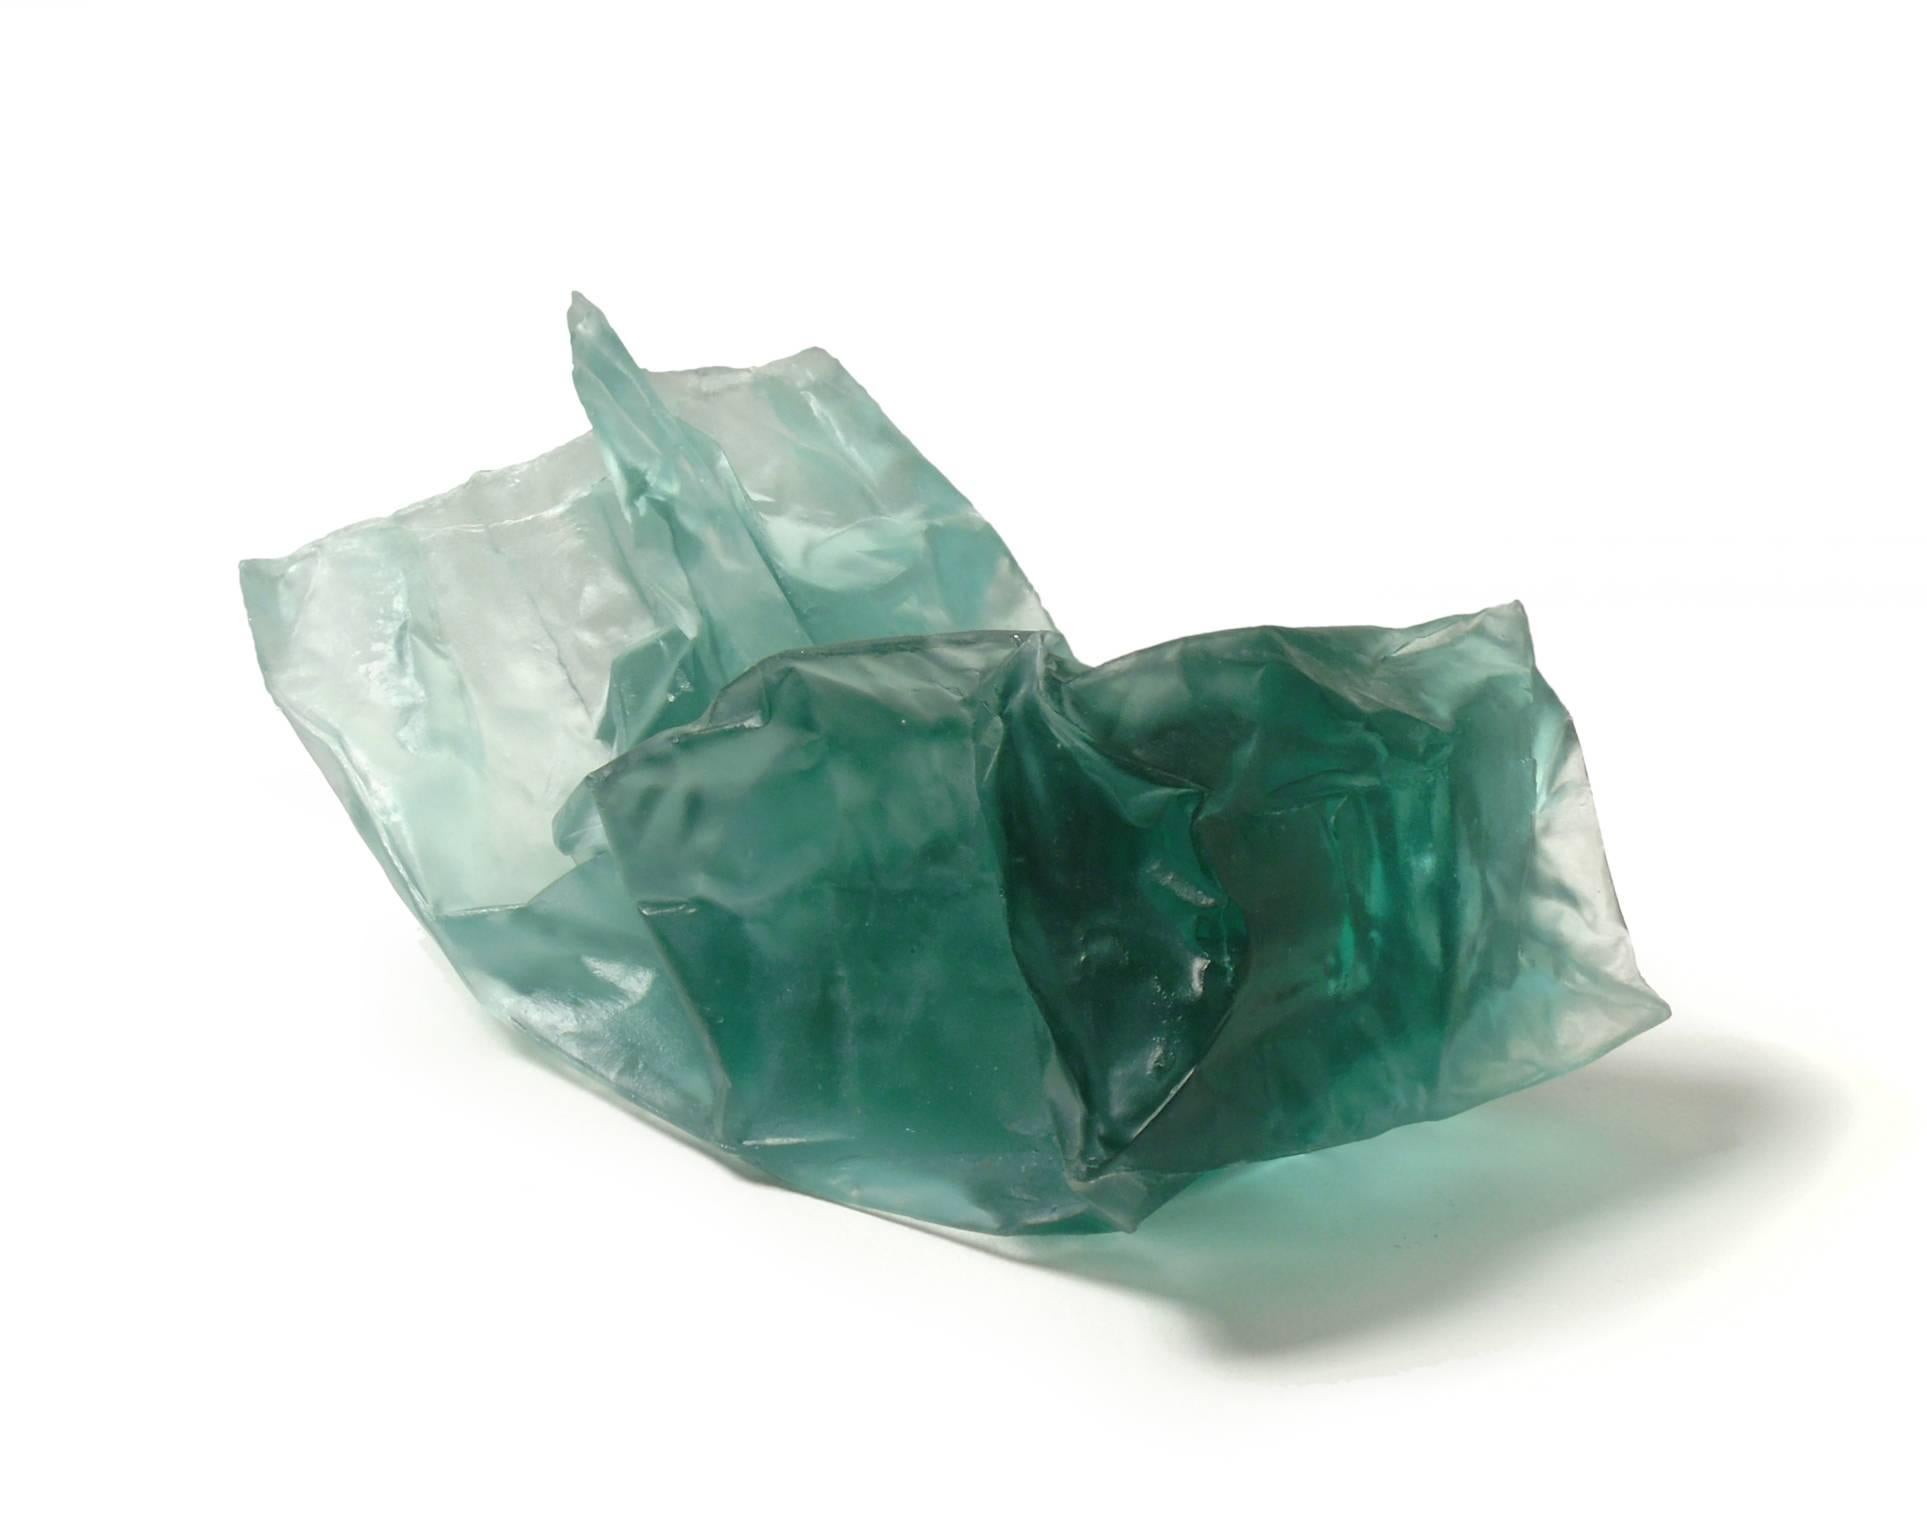 Benevolence - cast paper bag in green glass - Sculpture by Jennifer Halvorson